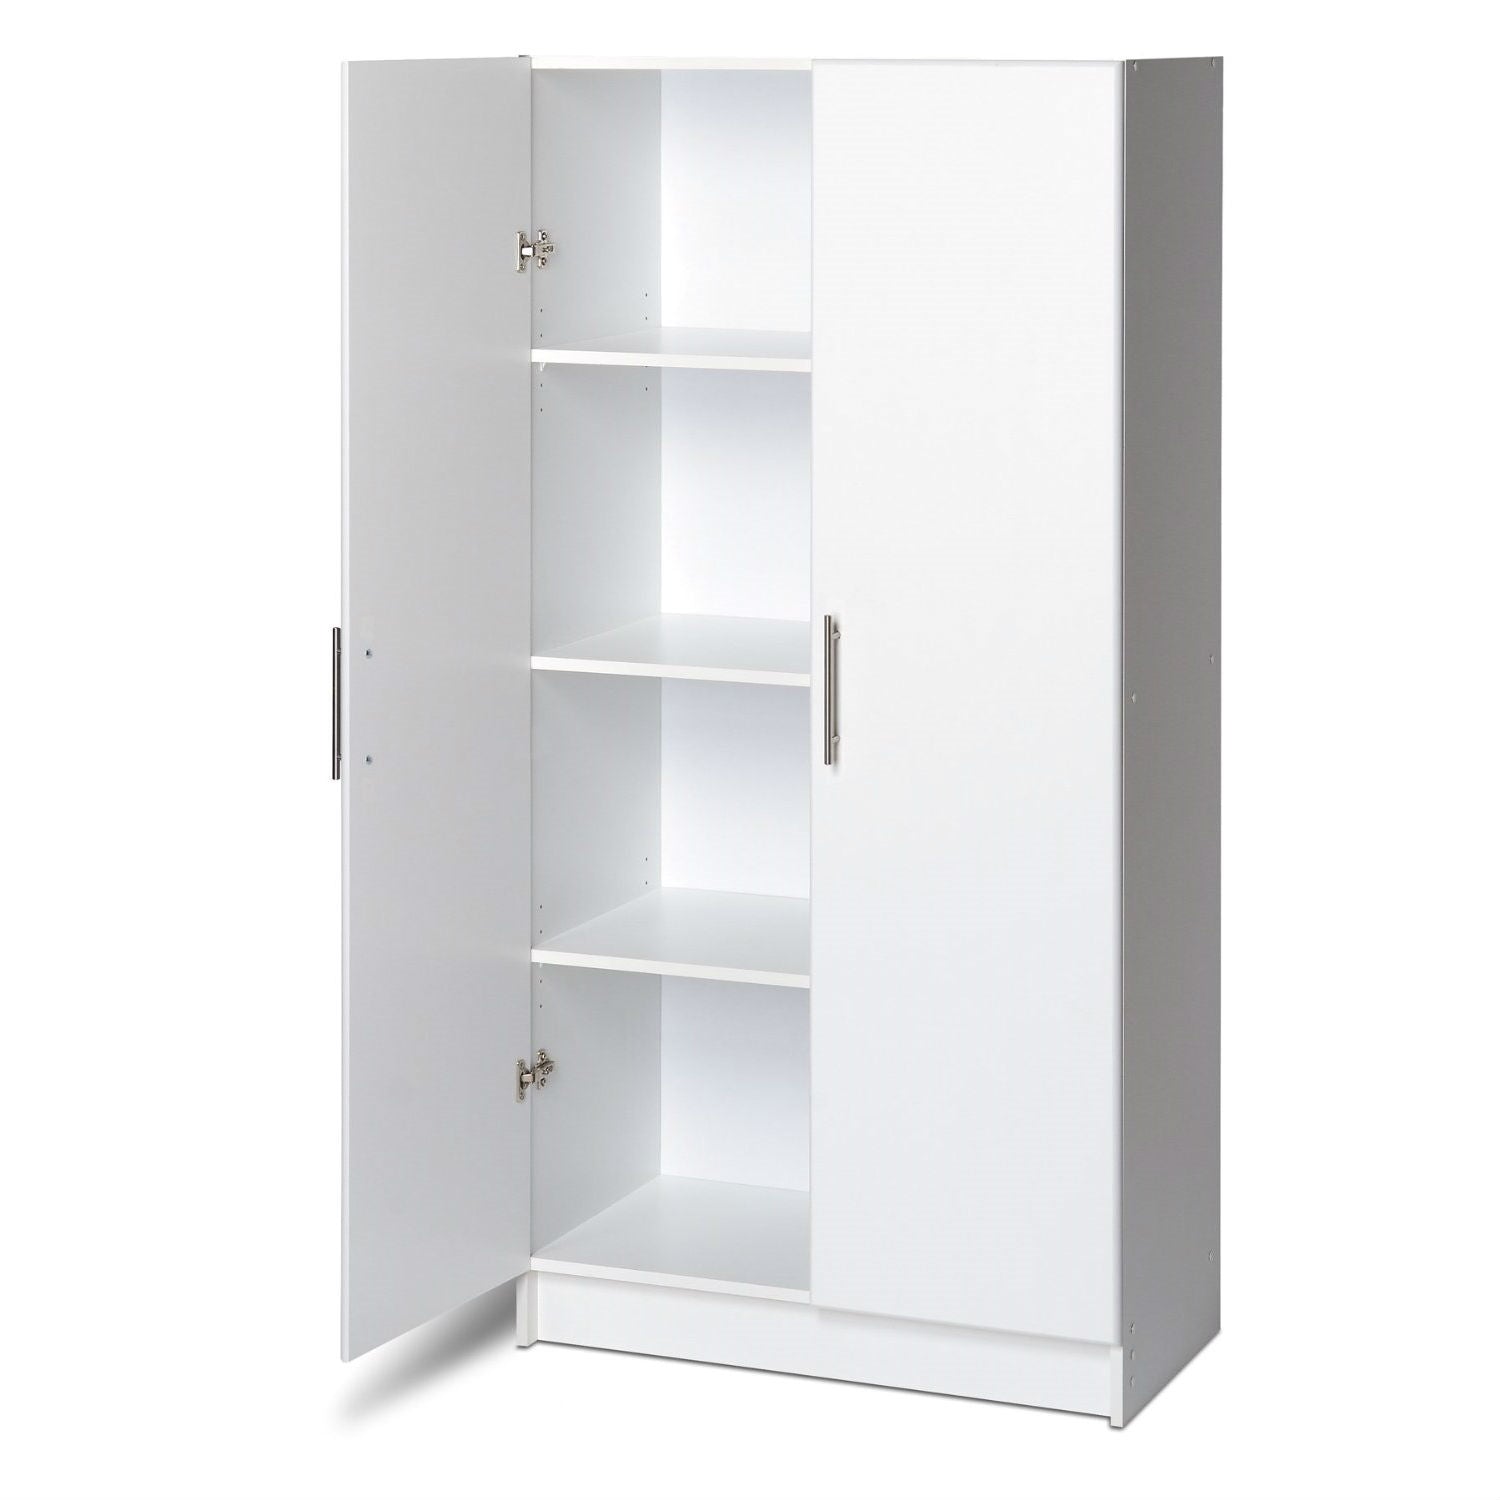 FastFurnishings White Storage Cabinet Utility Garage Home Office Kitchen Bedroom